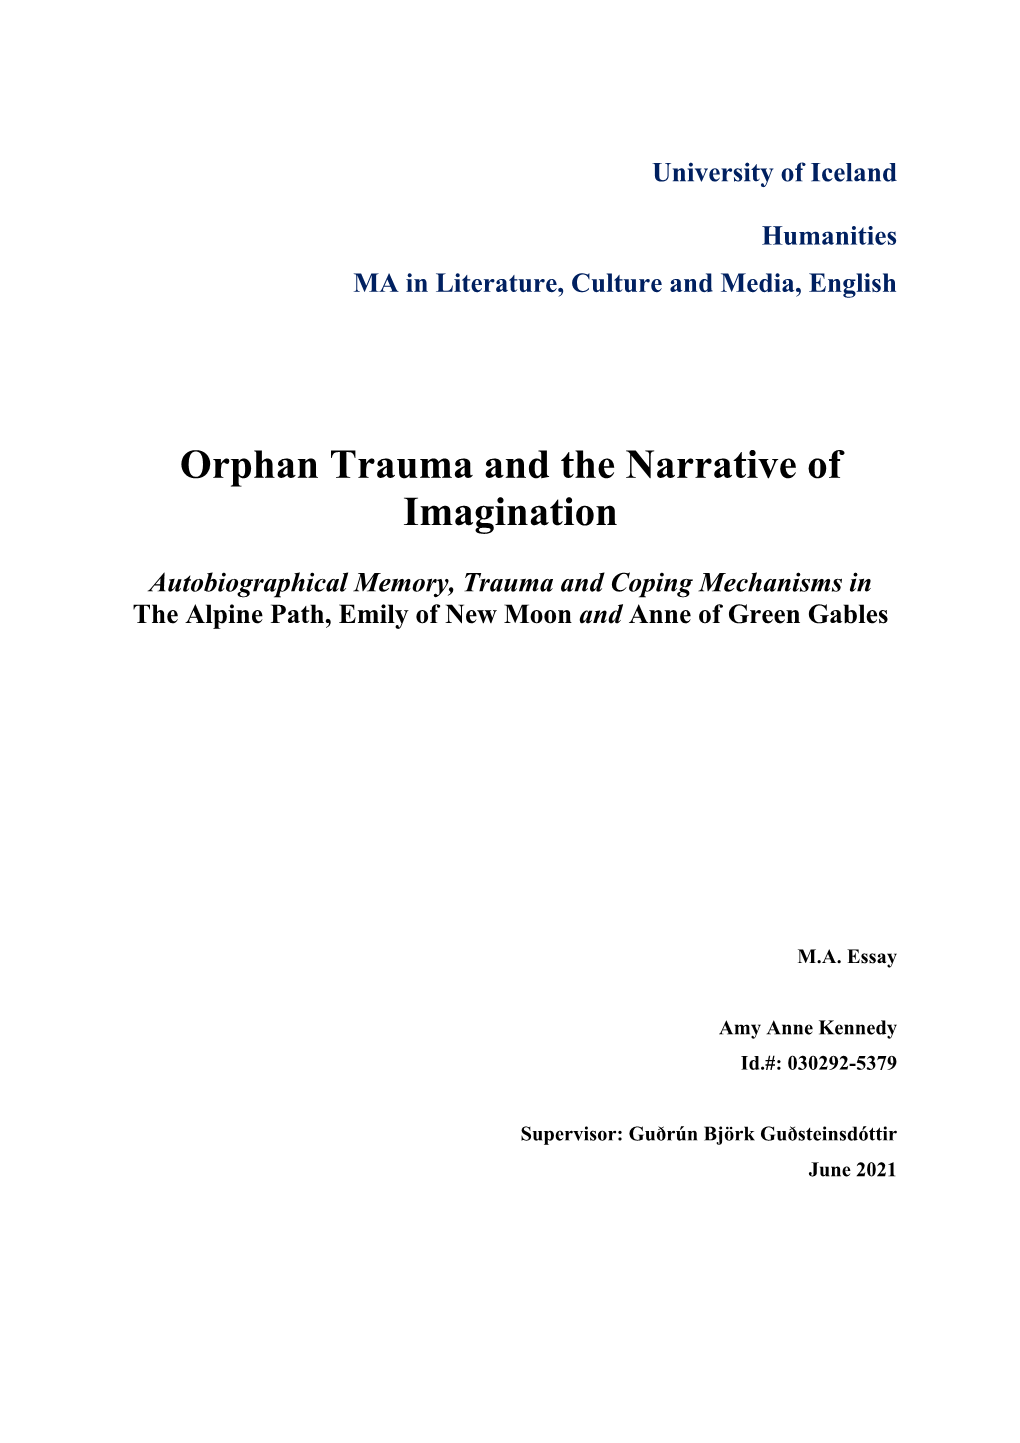 Orphan Trauma and the Narrative of Imagination